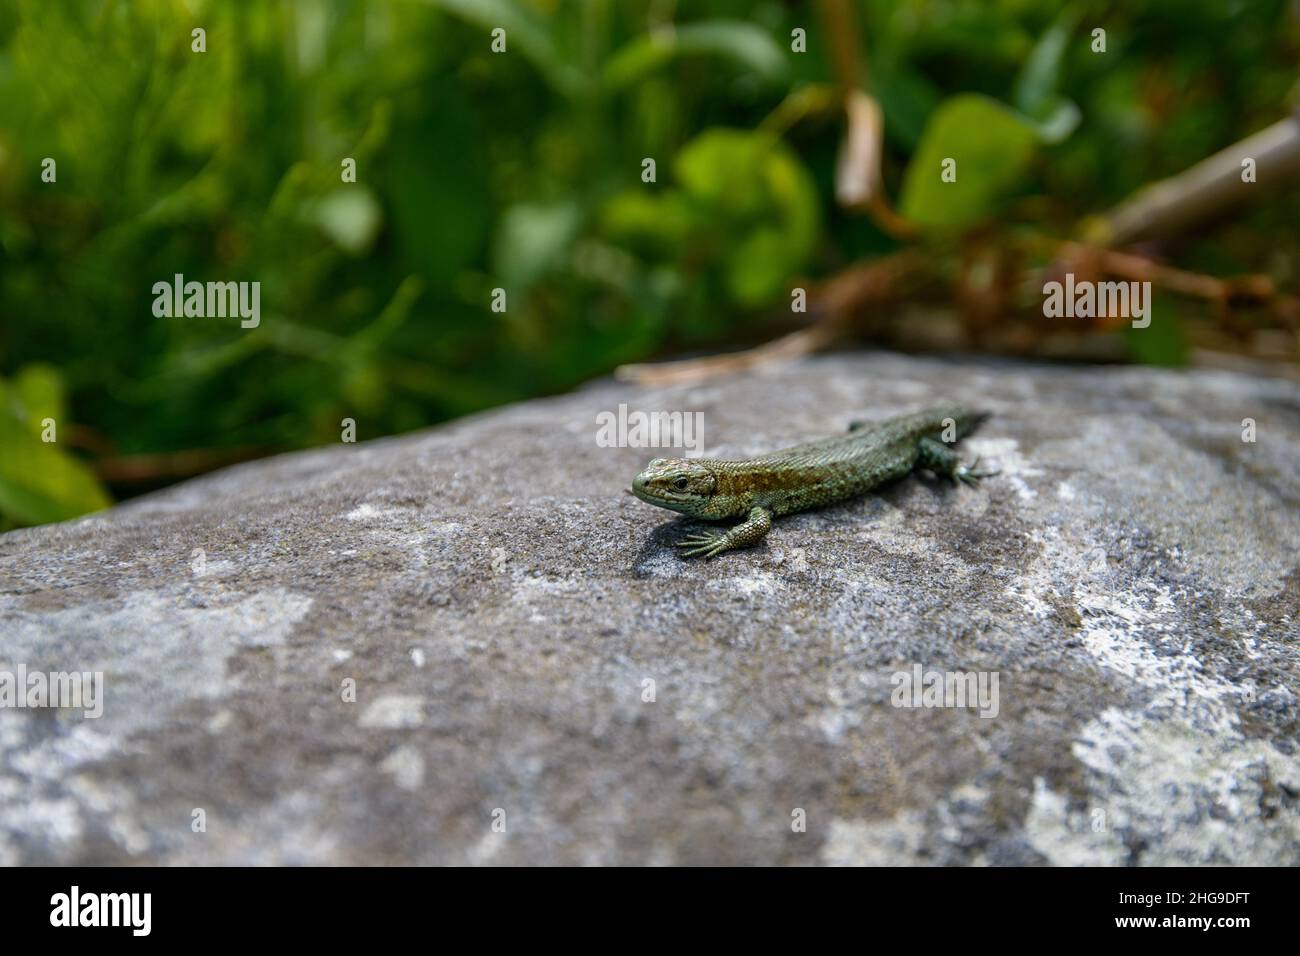 Close-up of a lizard on a rock, Ireland Stock Photo